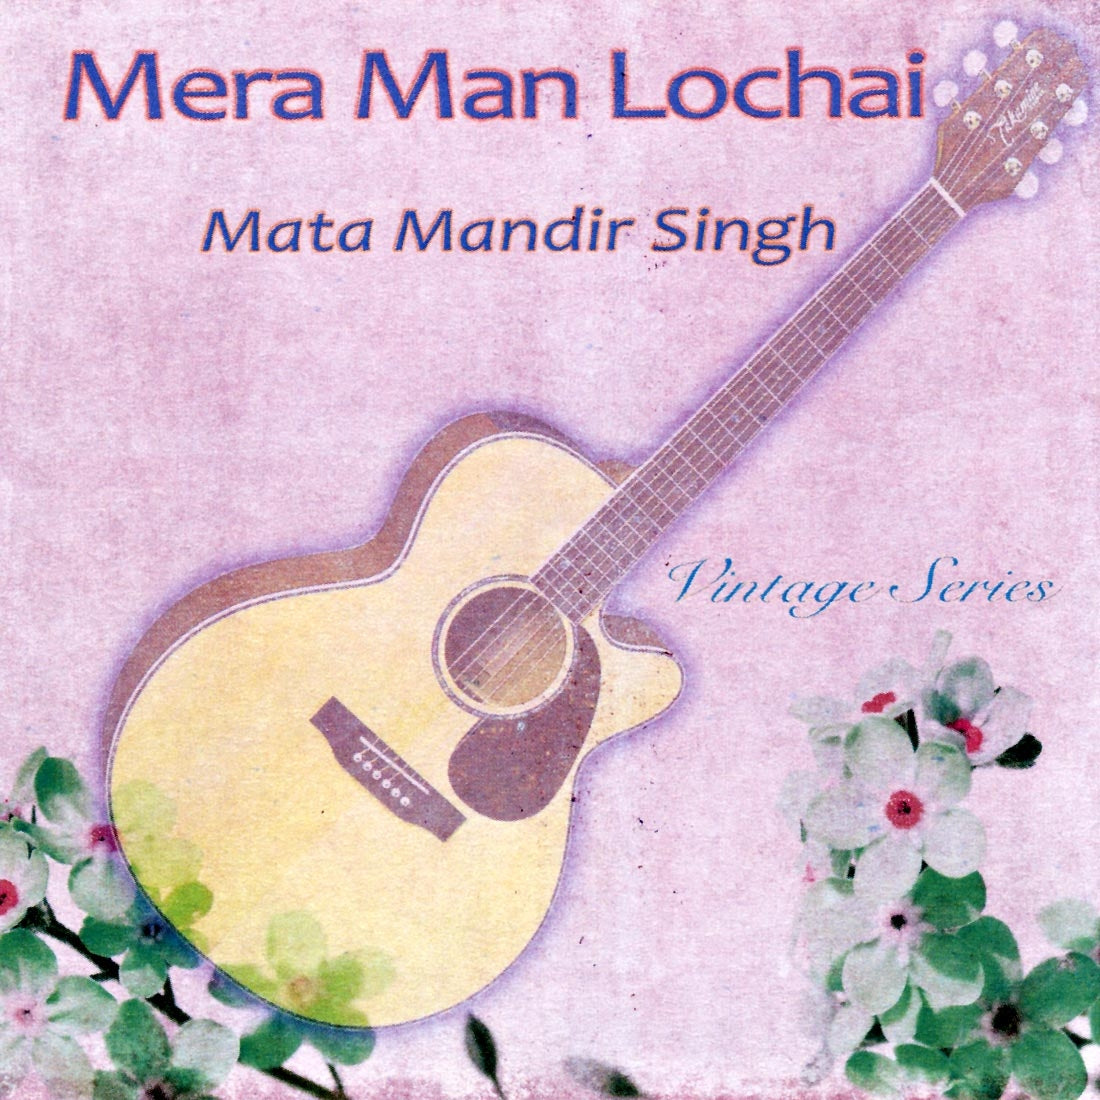 Mera Man Lochai - Mata Mandir Singh complete